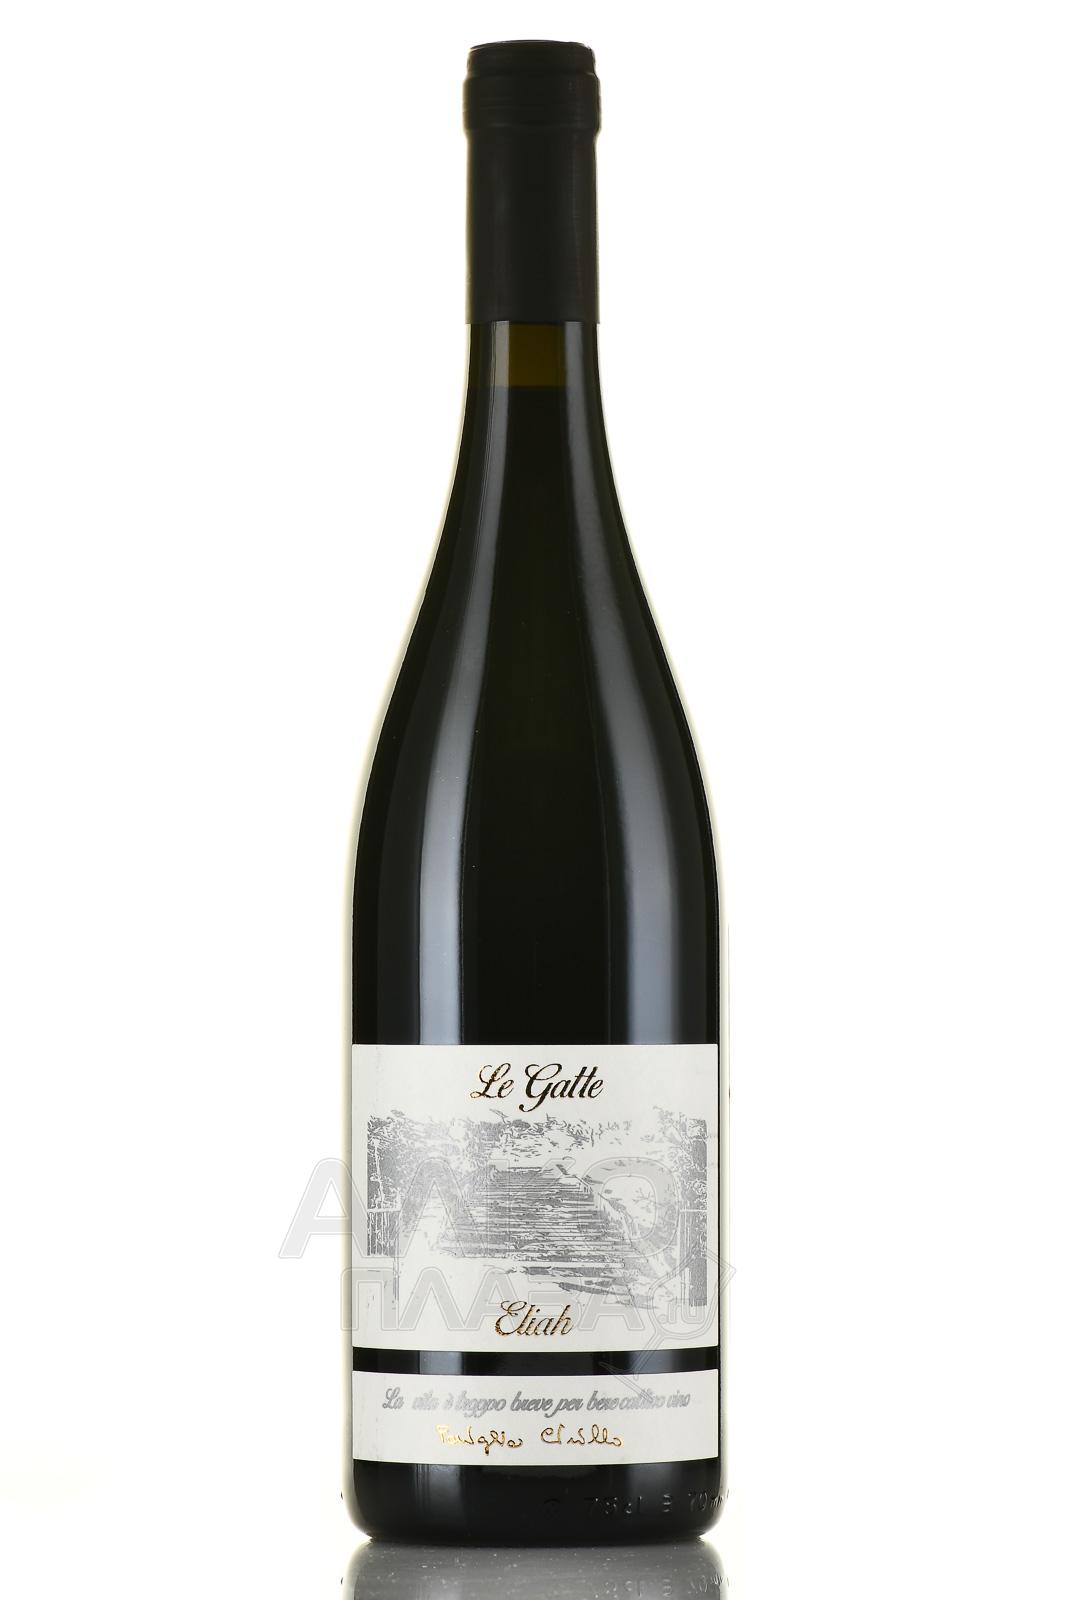 Le Gatte Eliah Rosso Riserva DOC - вино Ле Гатте Элиа Россо Ризерва ДОК 0.75 л красное сухое 2016